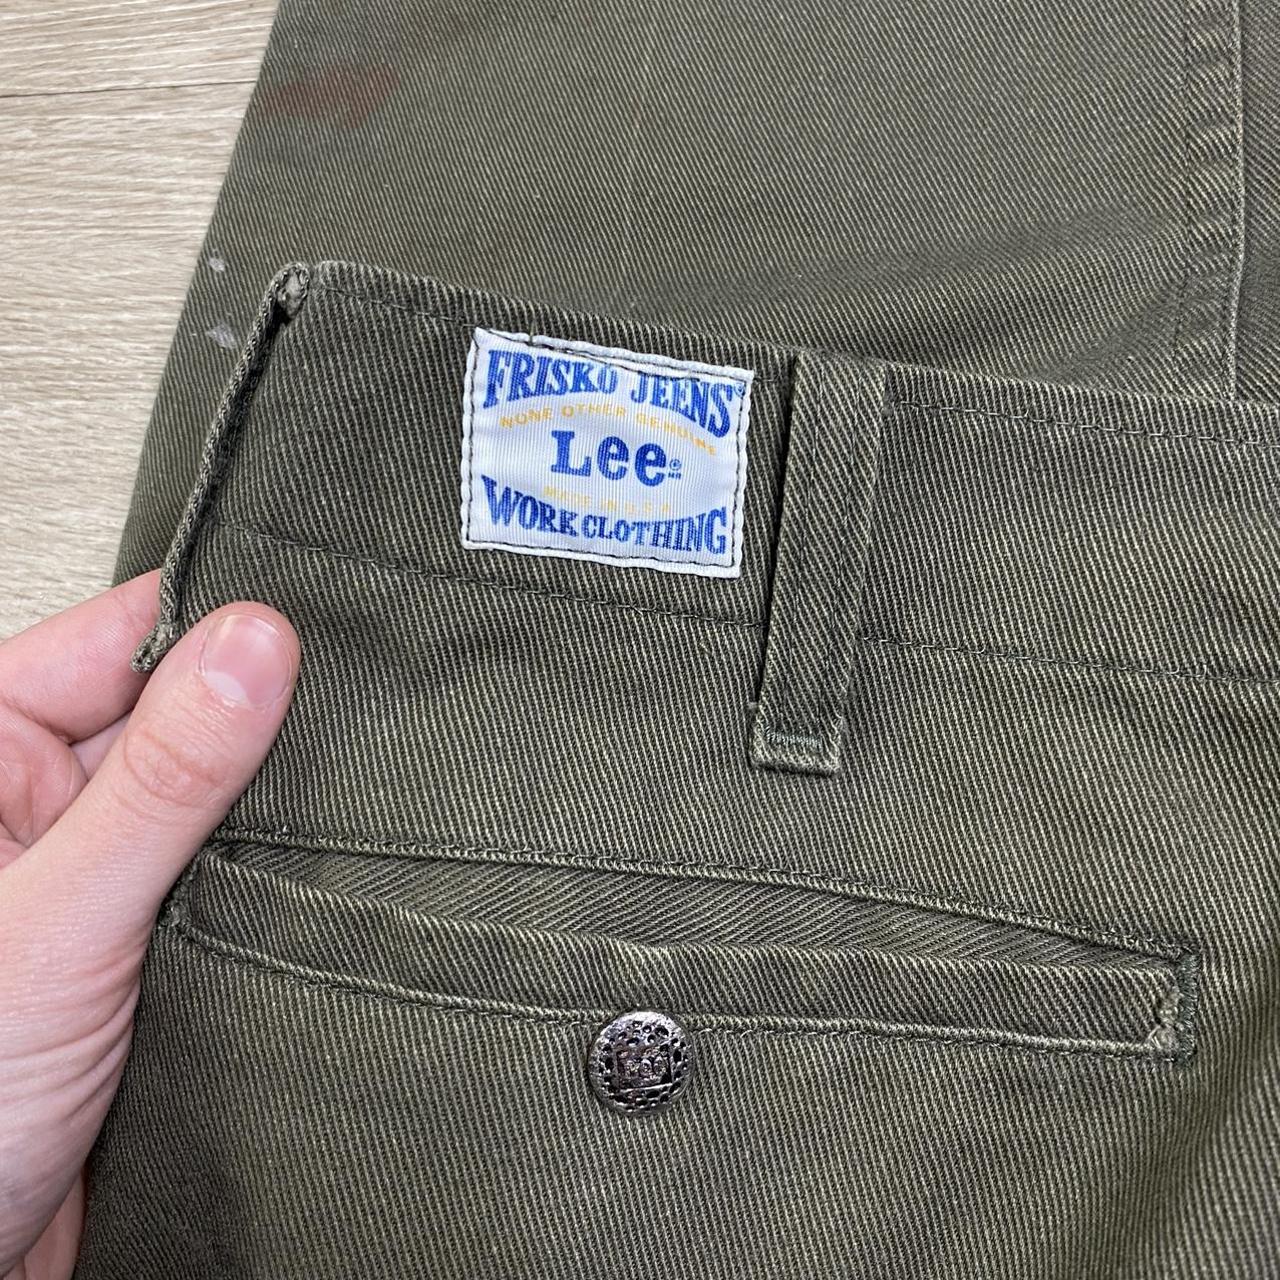 Vintage 60s Lee Frisco Jeens Work Clothing Pants USA...